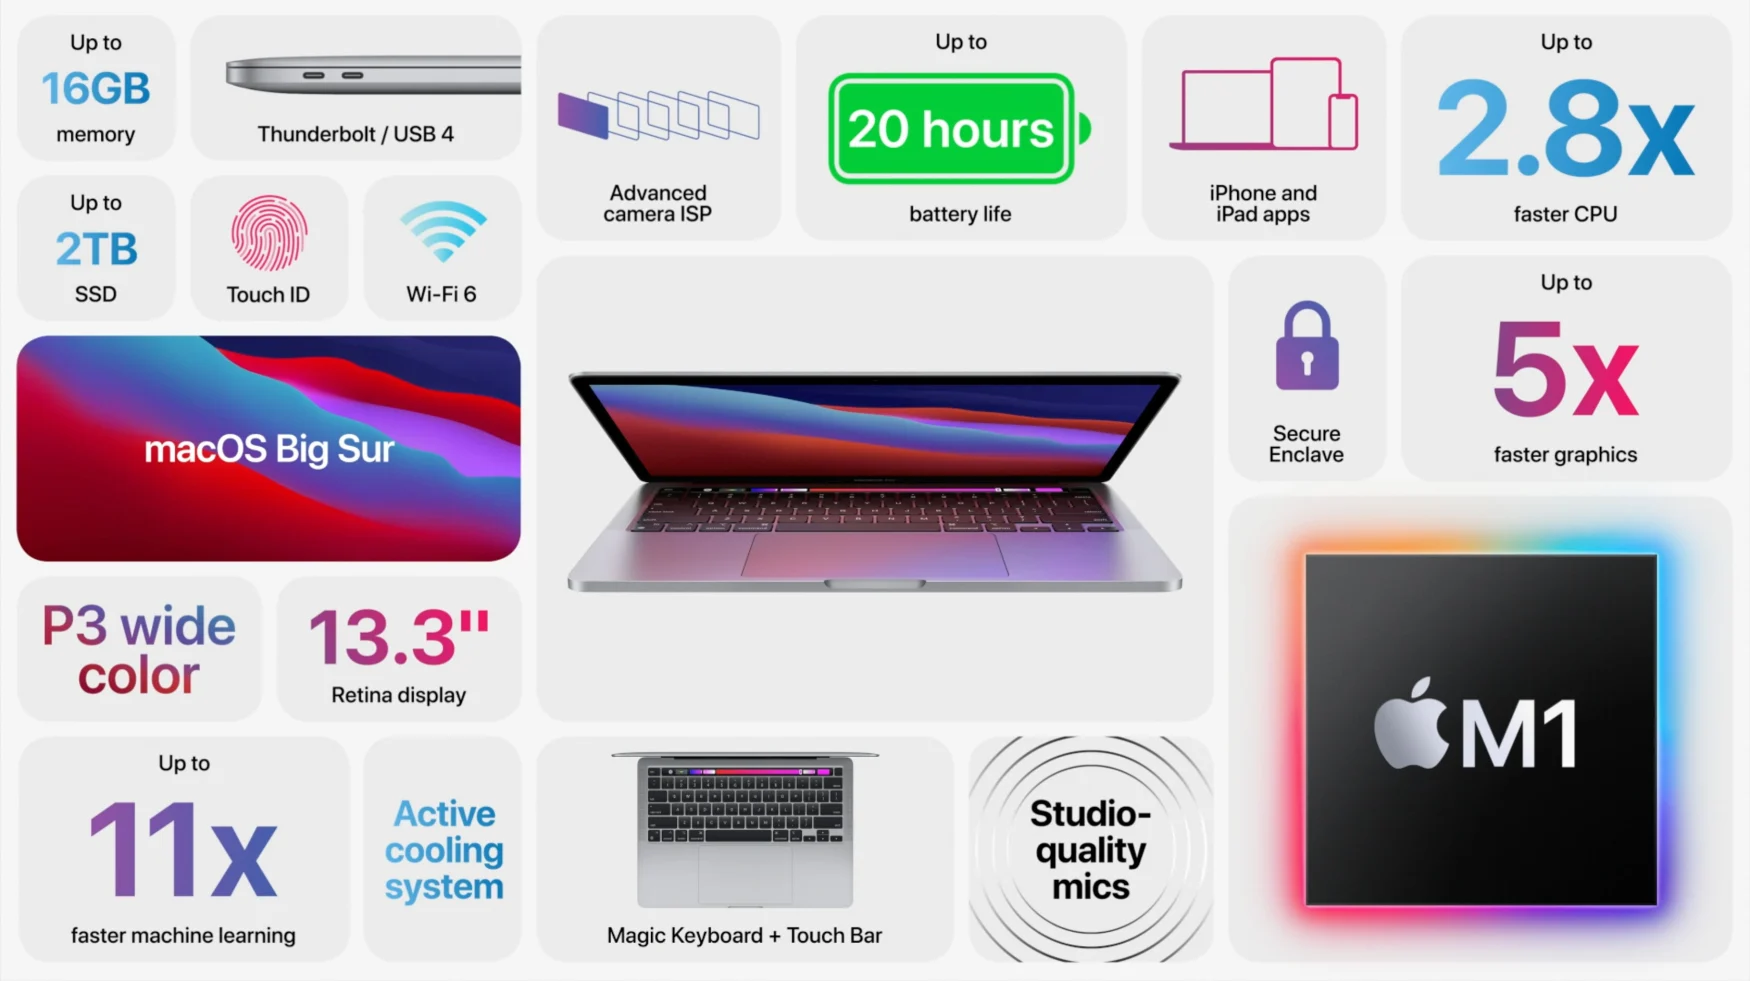 M1 MacBook Pro details